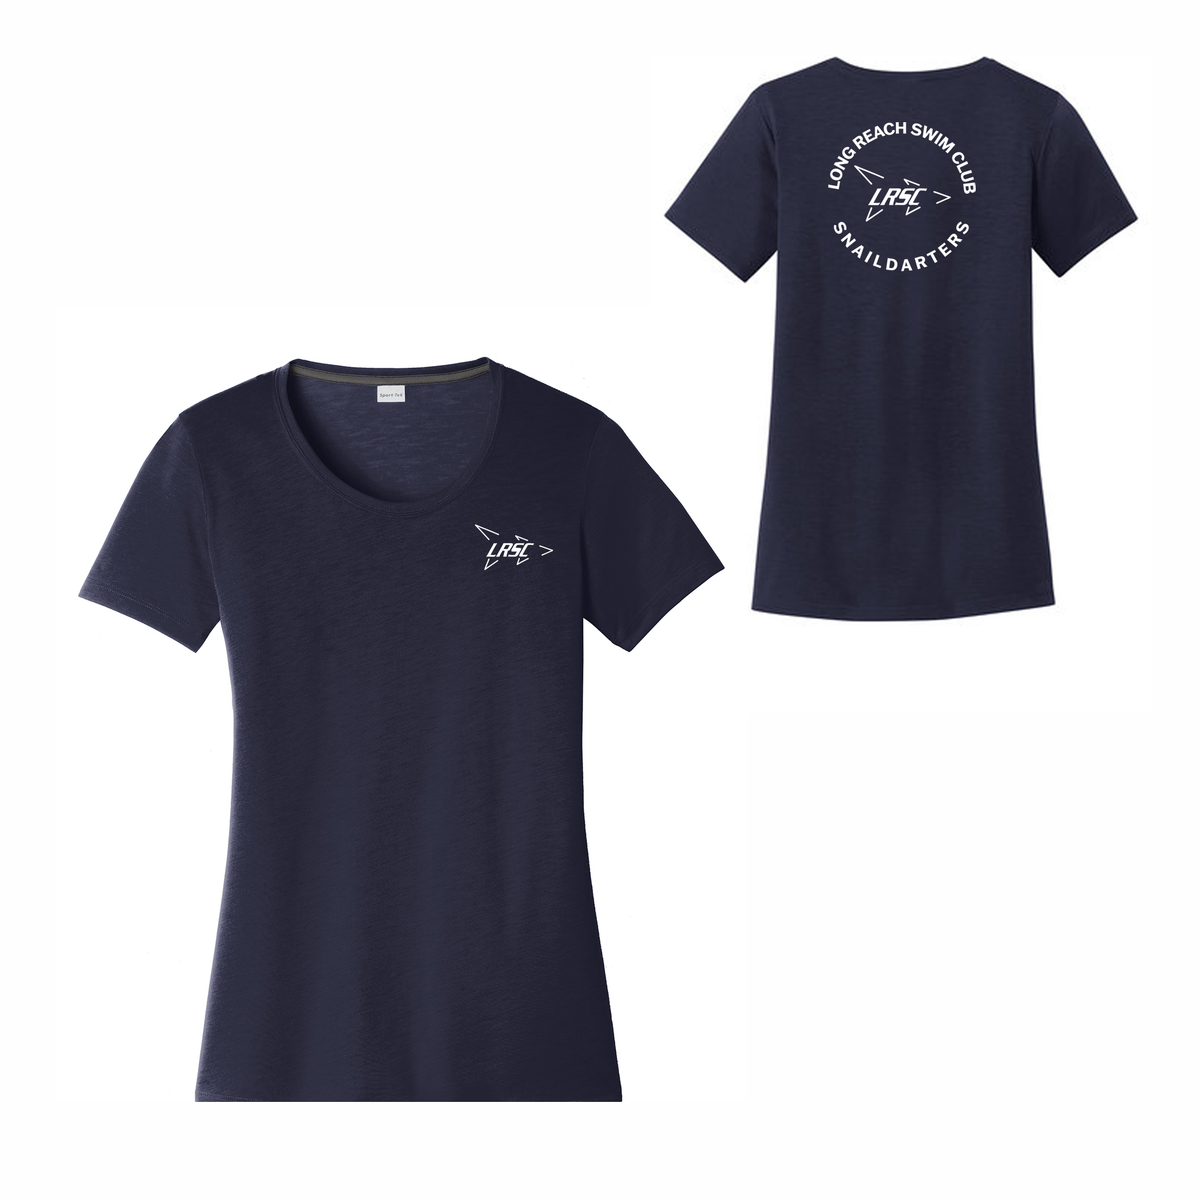 Long Reach Swim Club Women's CottonTouch Performance T-Shirt